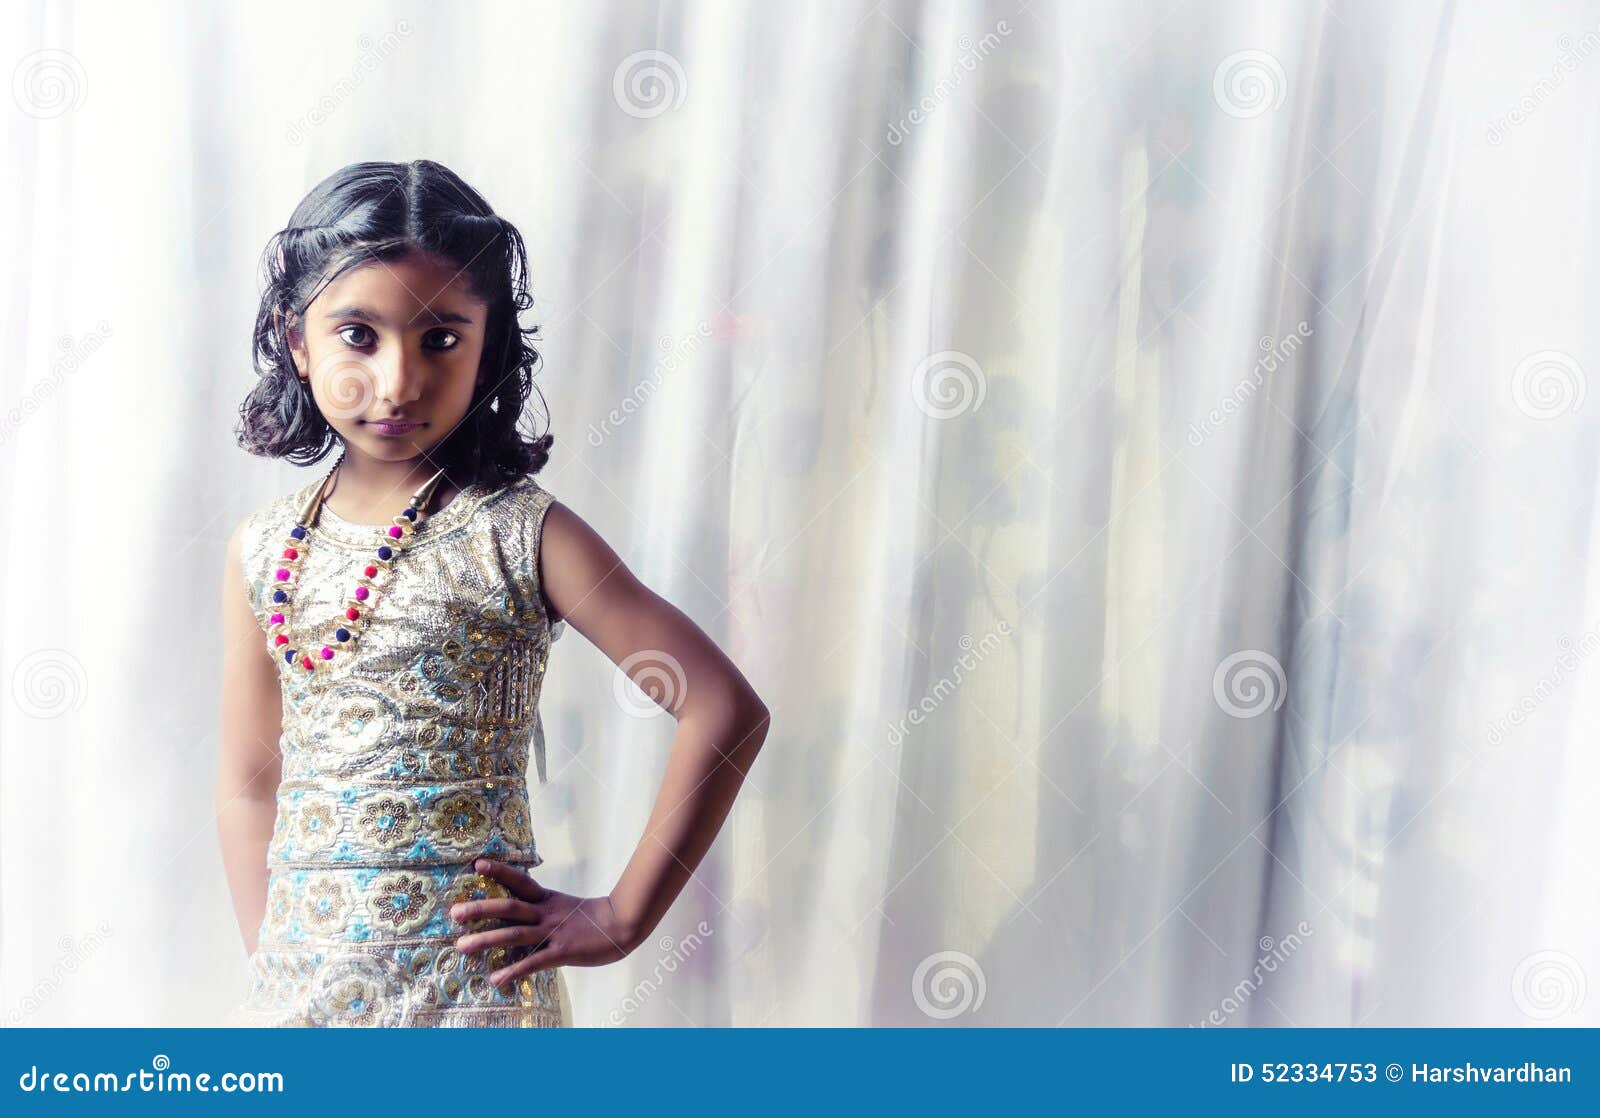 portrait of small girl child stock image - image of instudio